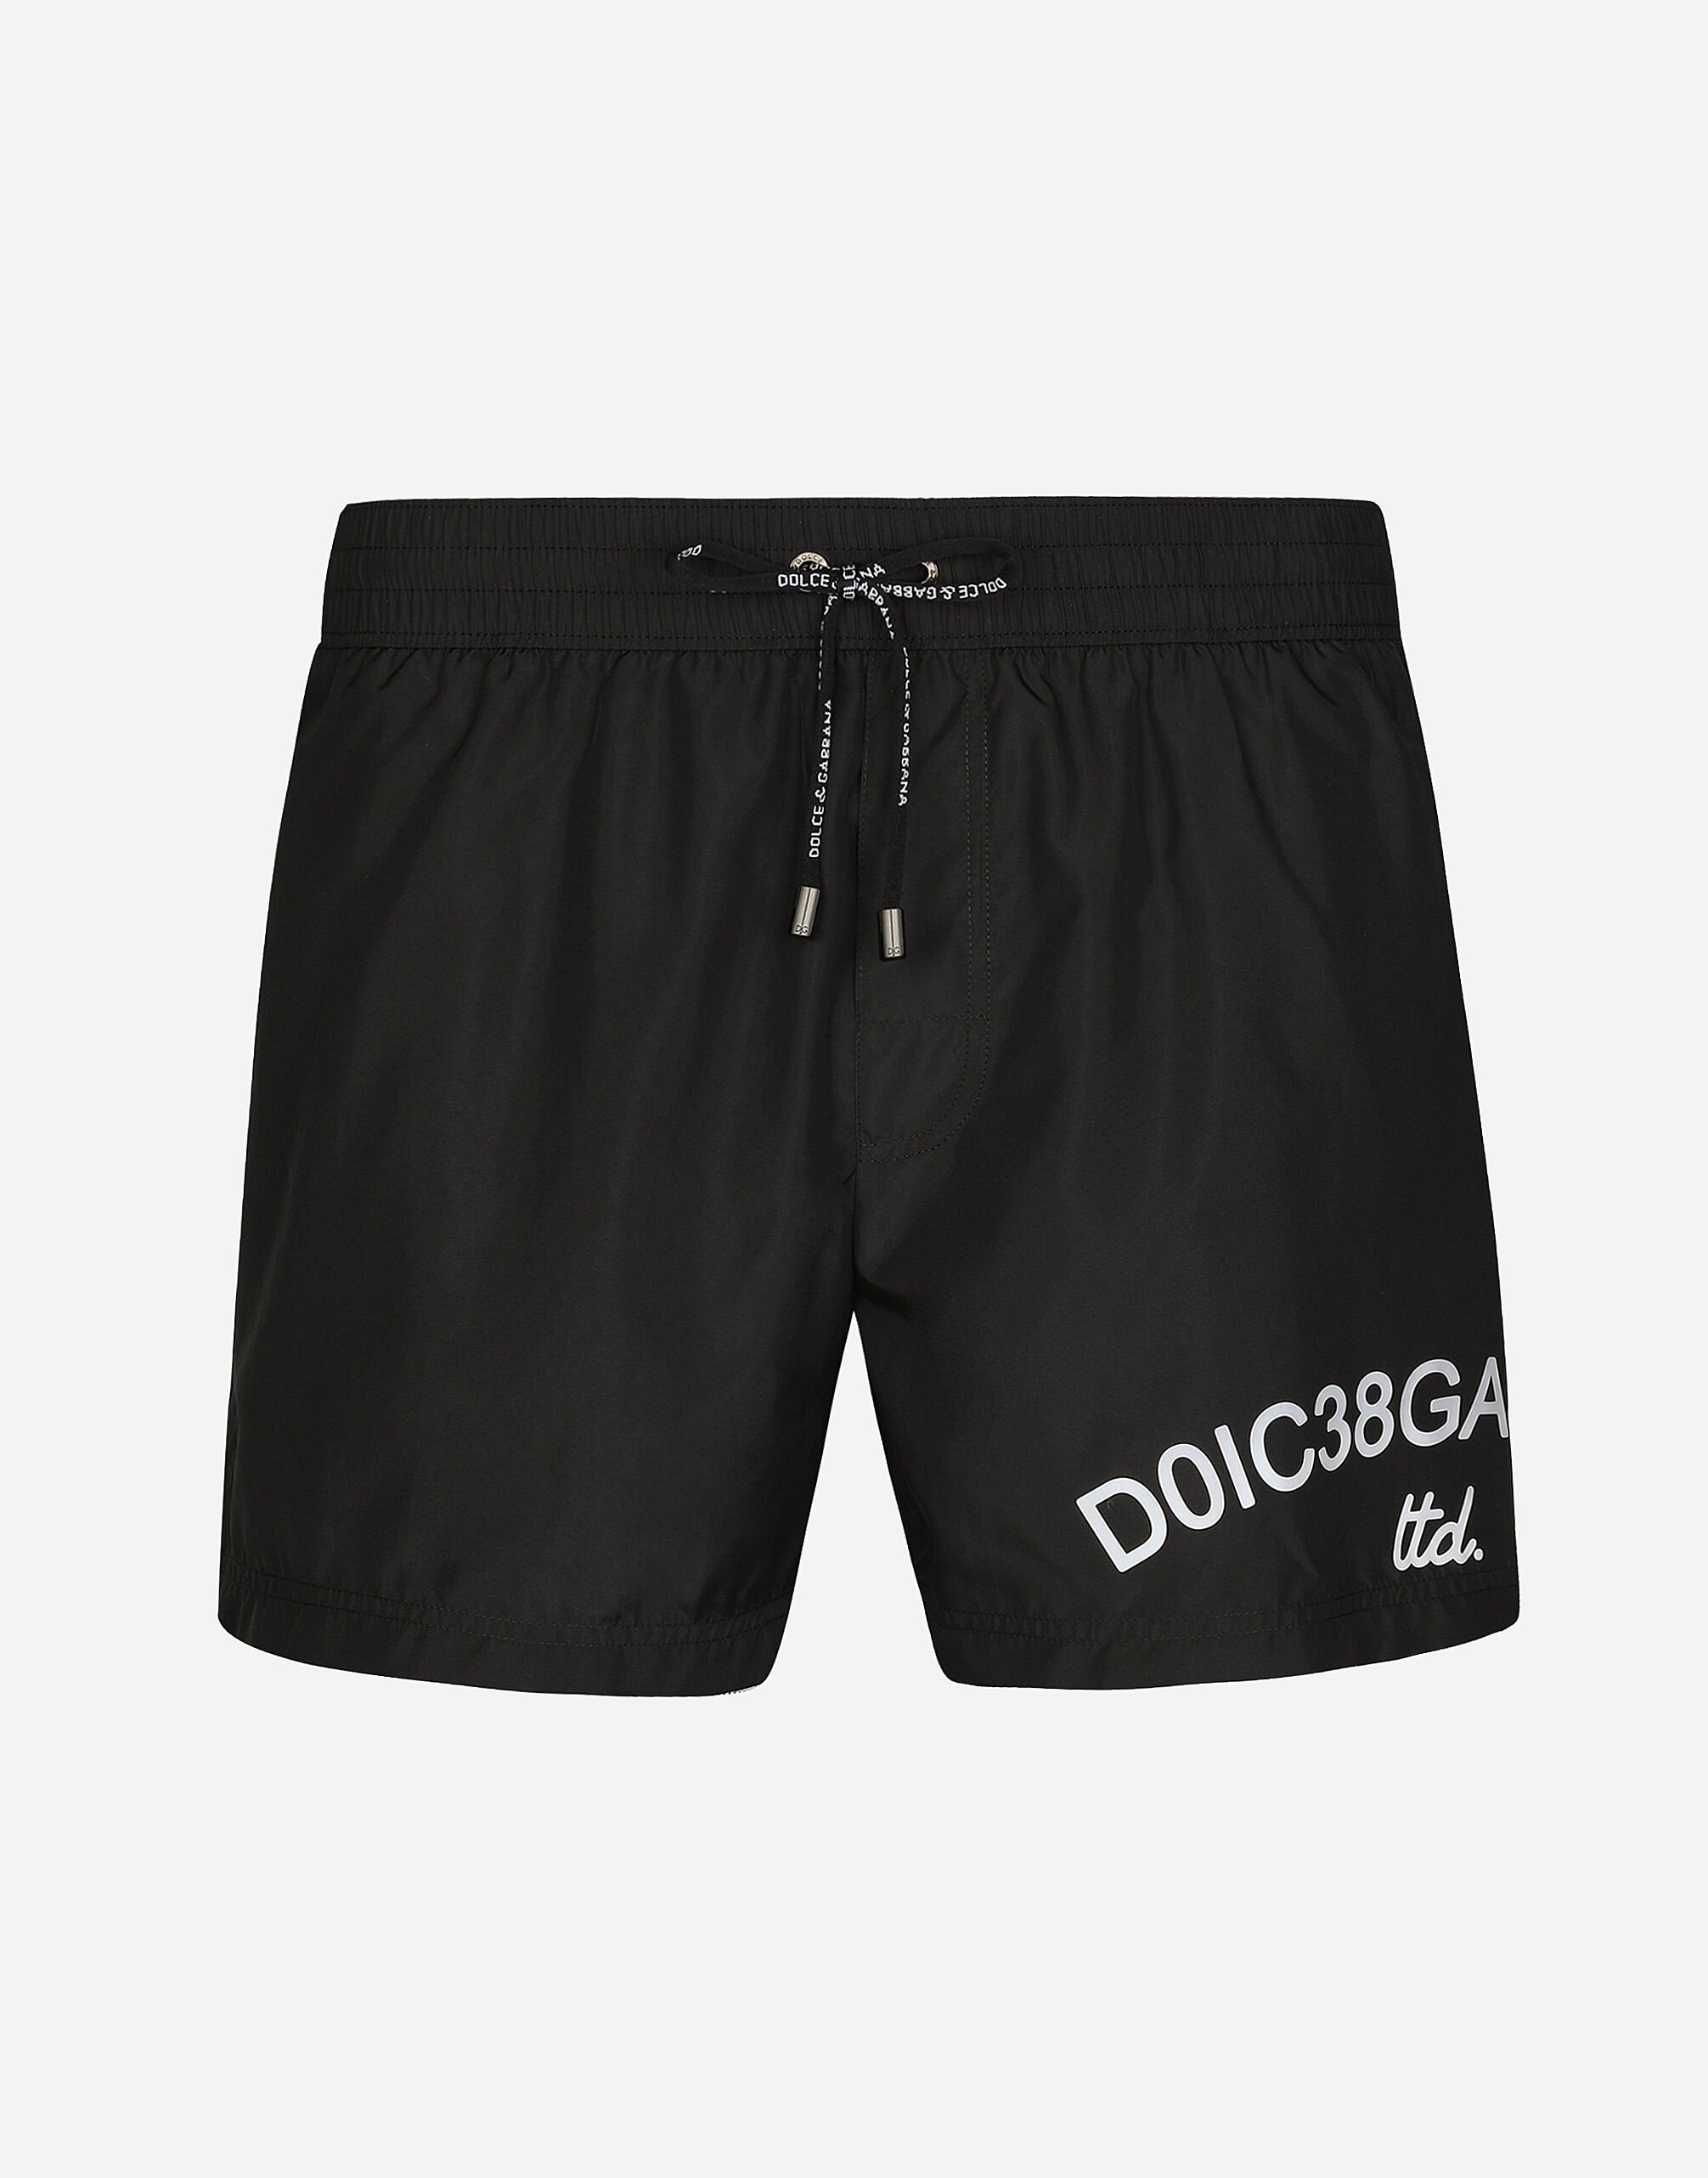 Dolce & Gabbana Short swim trunks with Dolce&Gabbana logo Print M4A13TISMF5